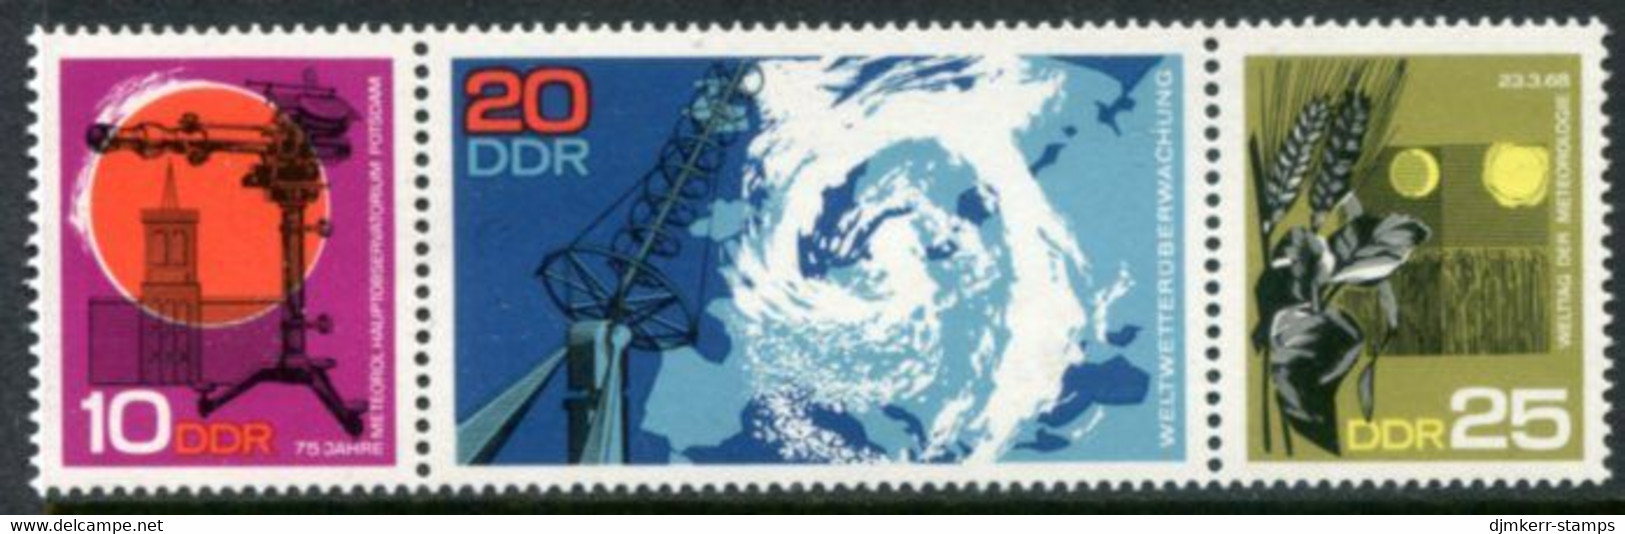 DDR / E. GERMANY 1968 Meteorological Observatory Strip MNH / **.  Michel 1343-45 - Ungebraucht